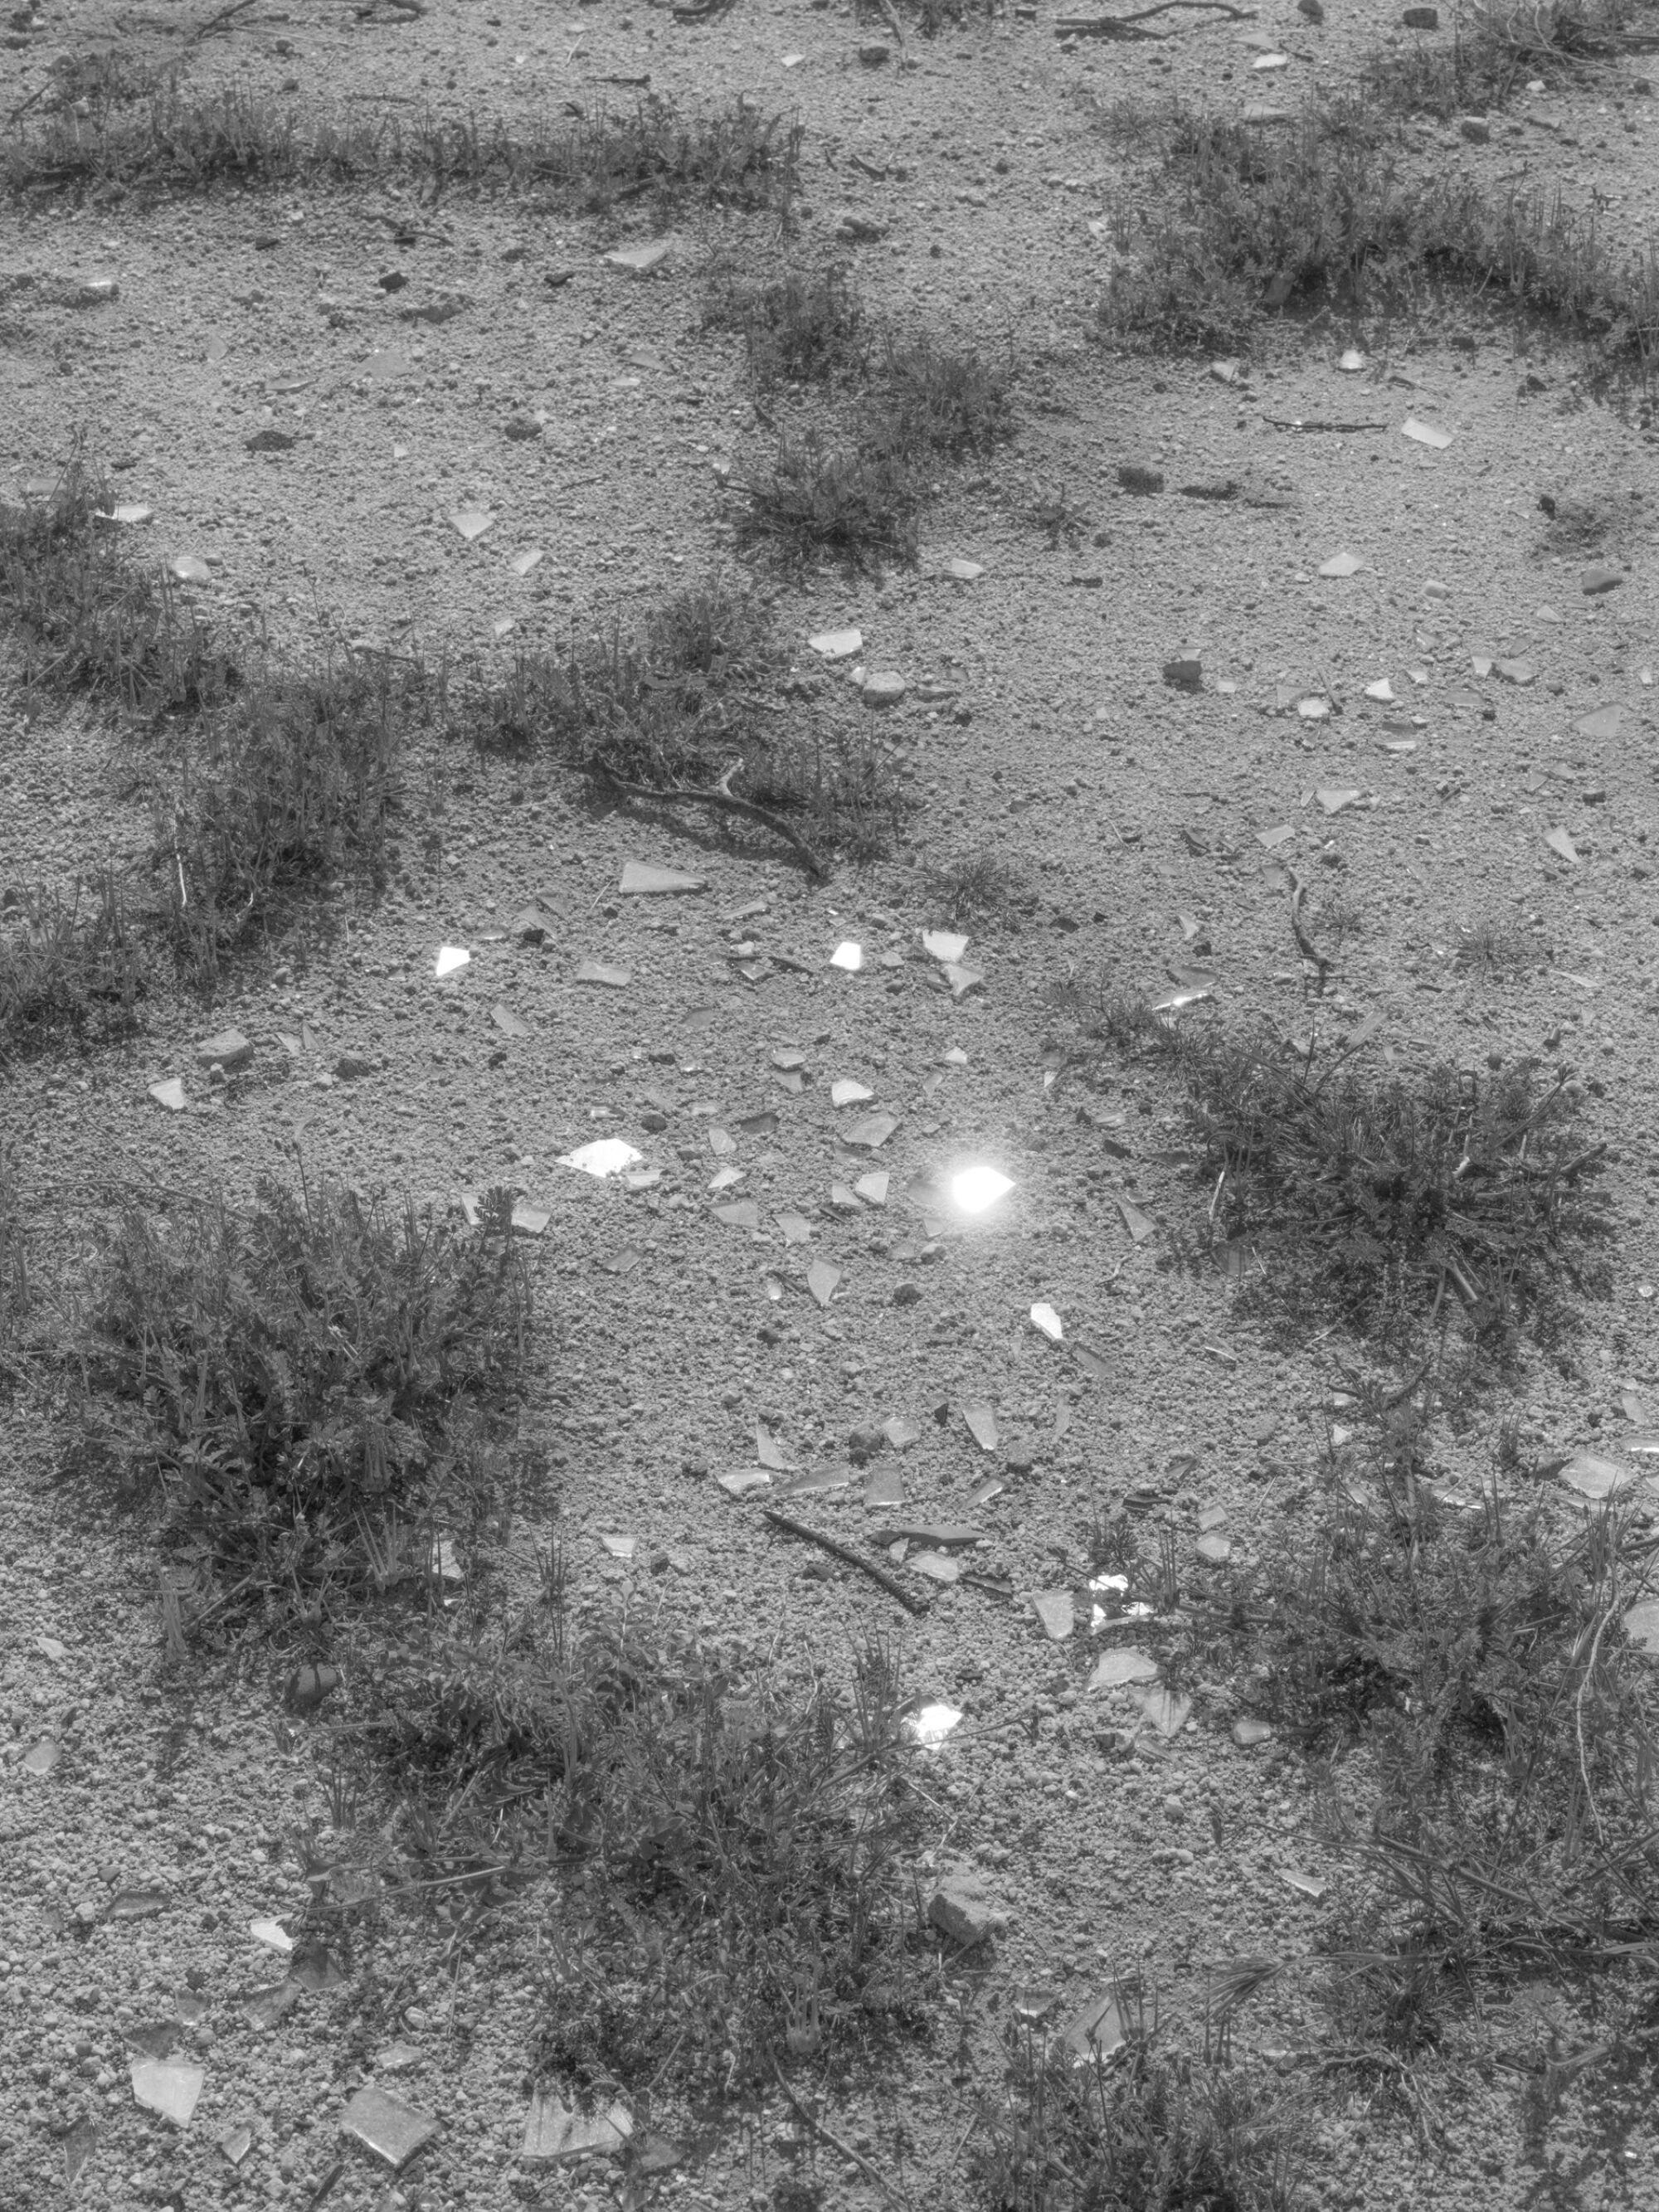 An image of the desert floor, shards of glass reflecting the light.